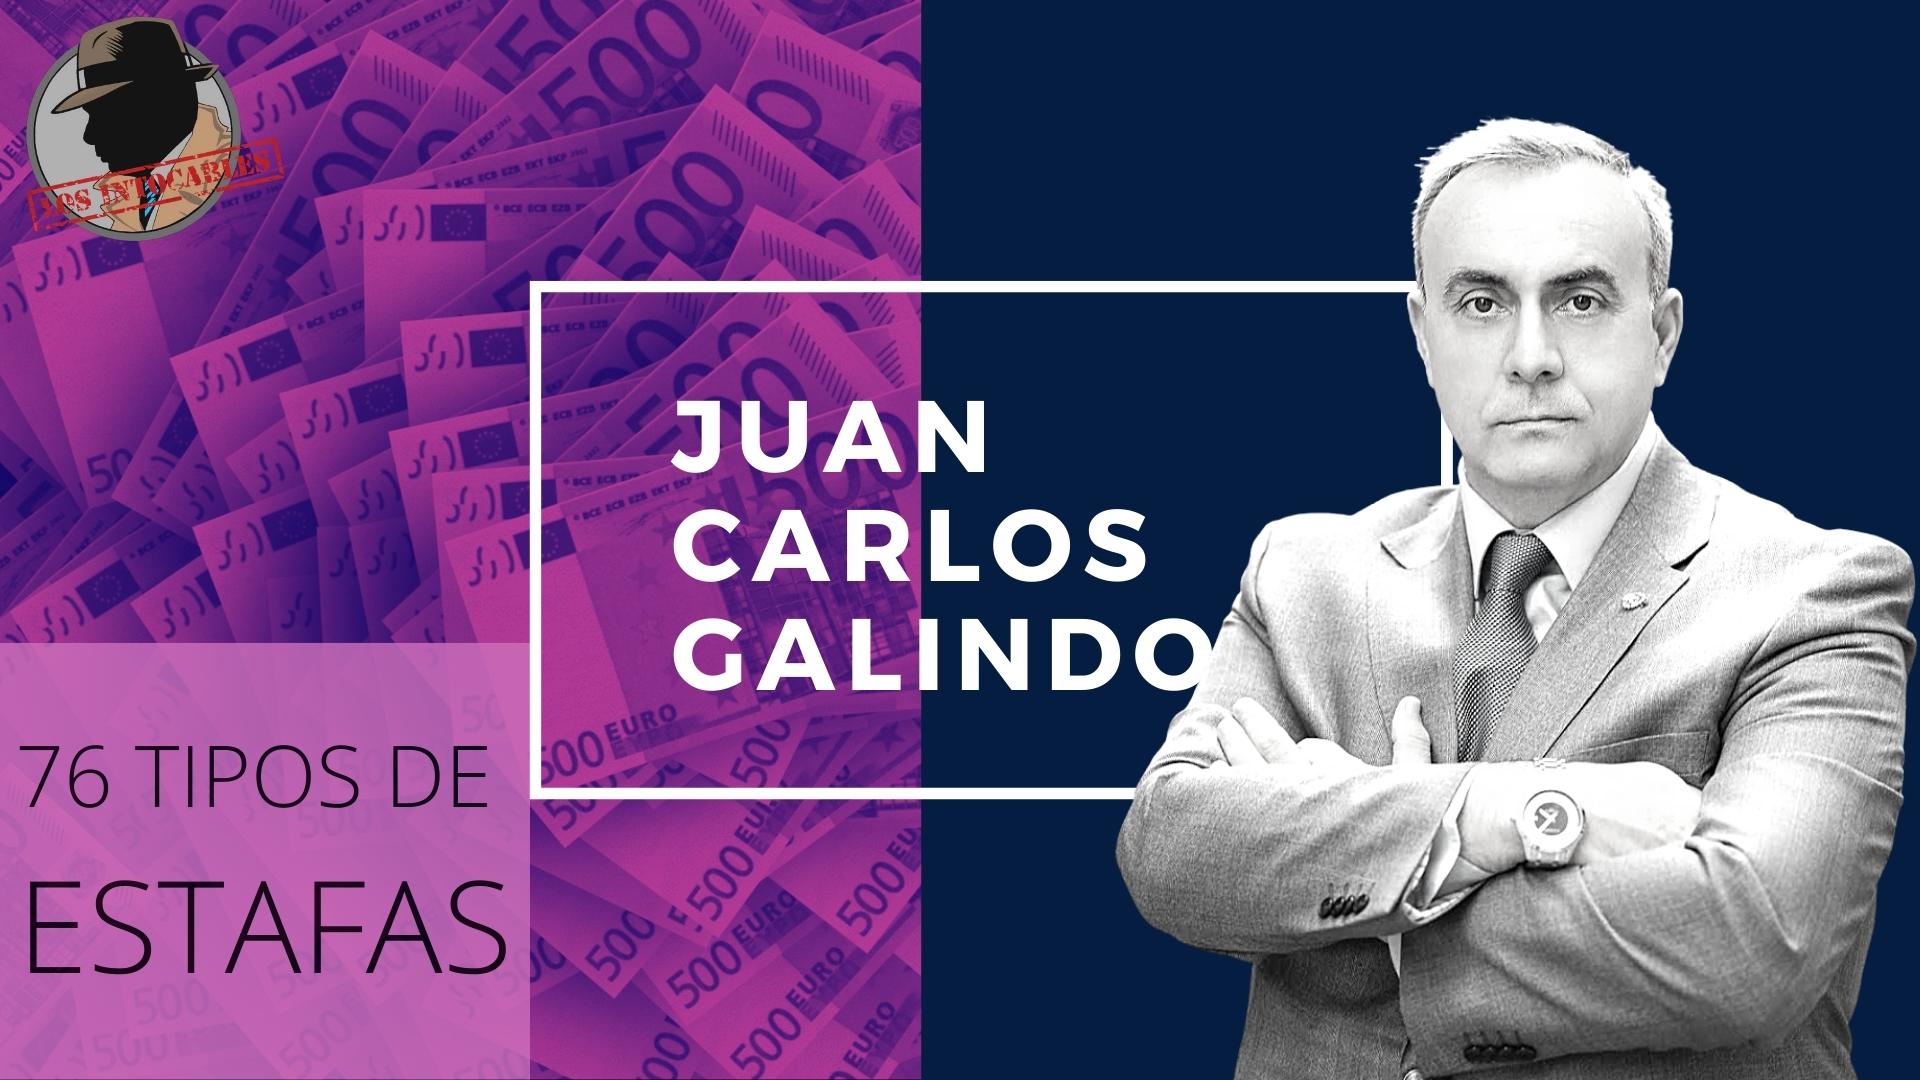 JUAN CARLOS GALINDO